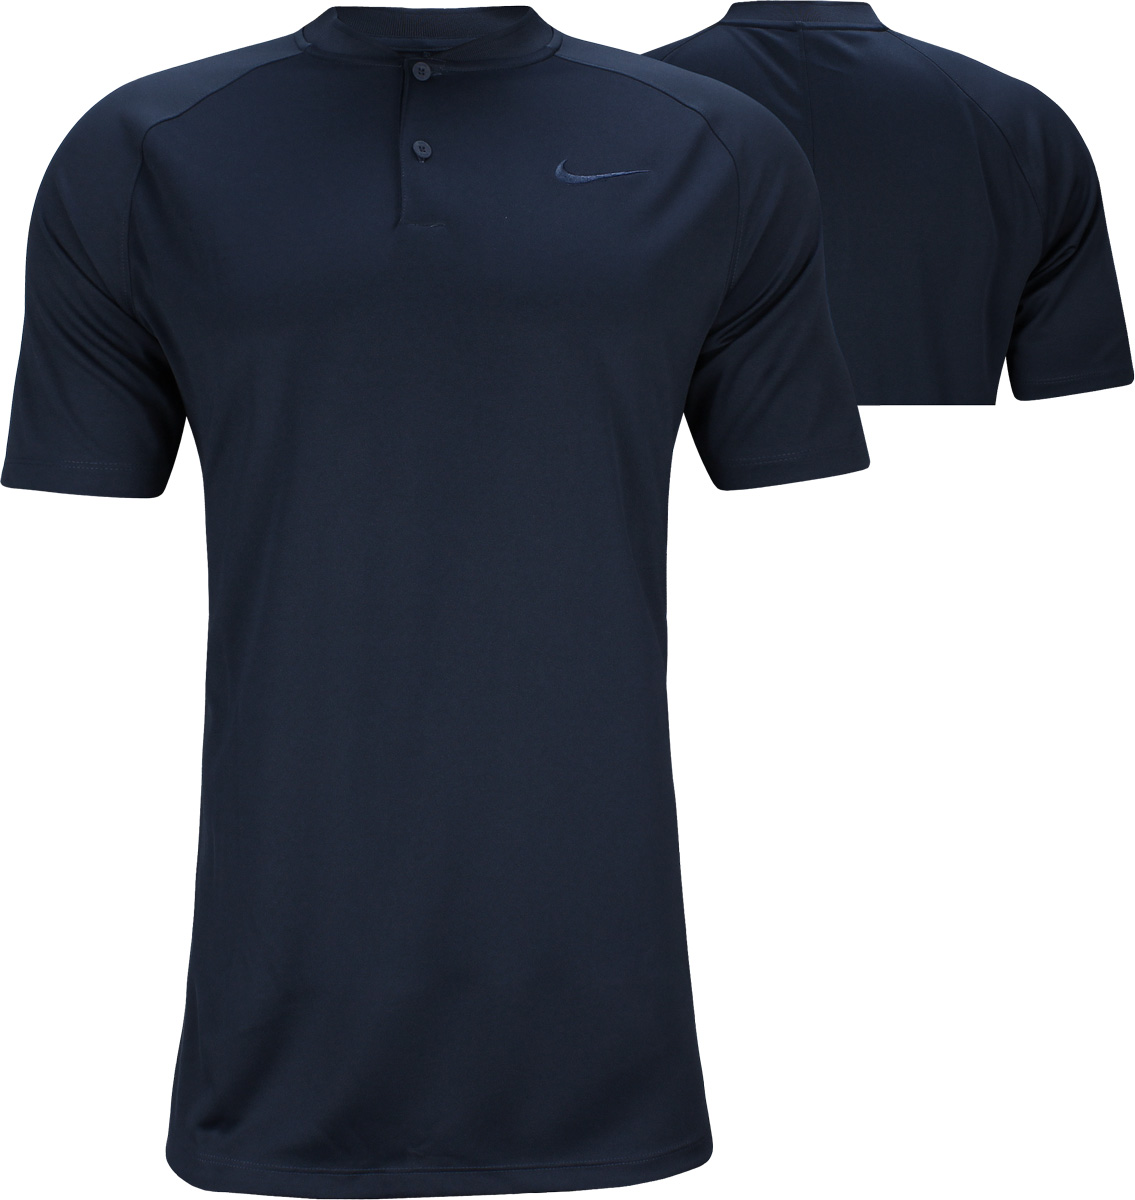 new nike golf shirts 2019